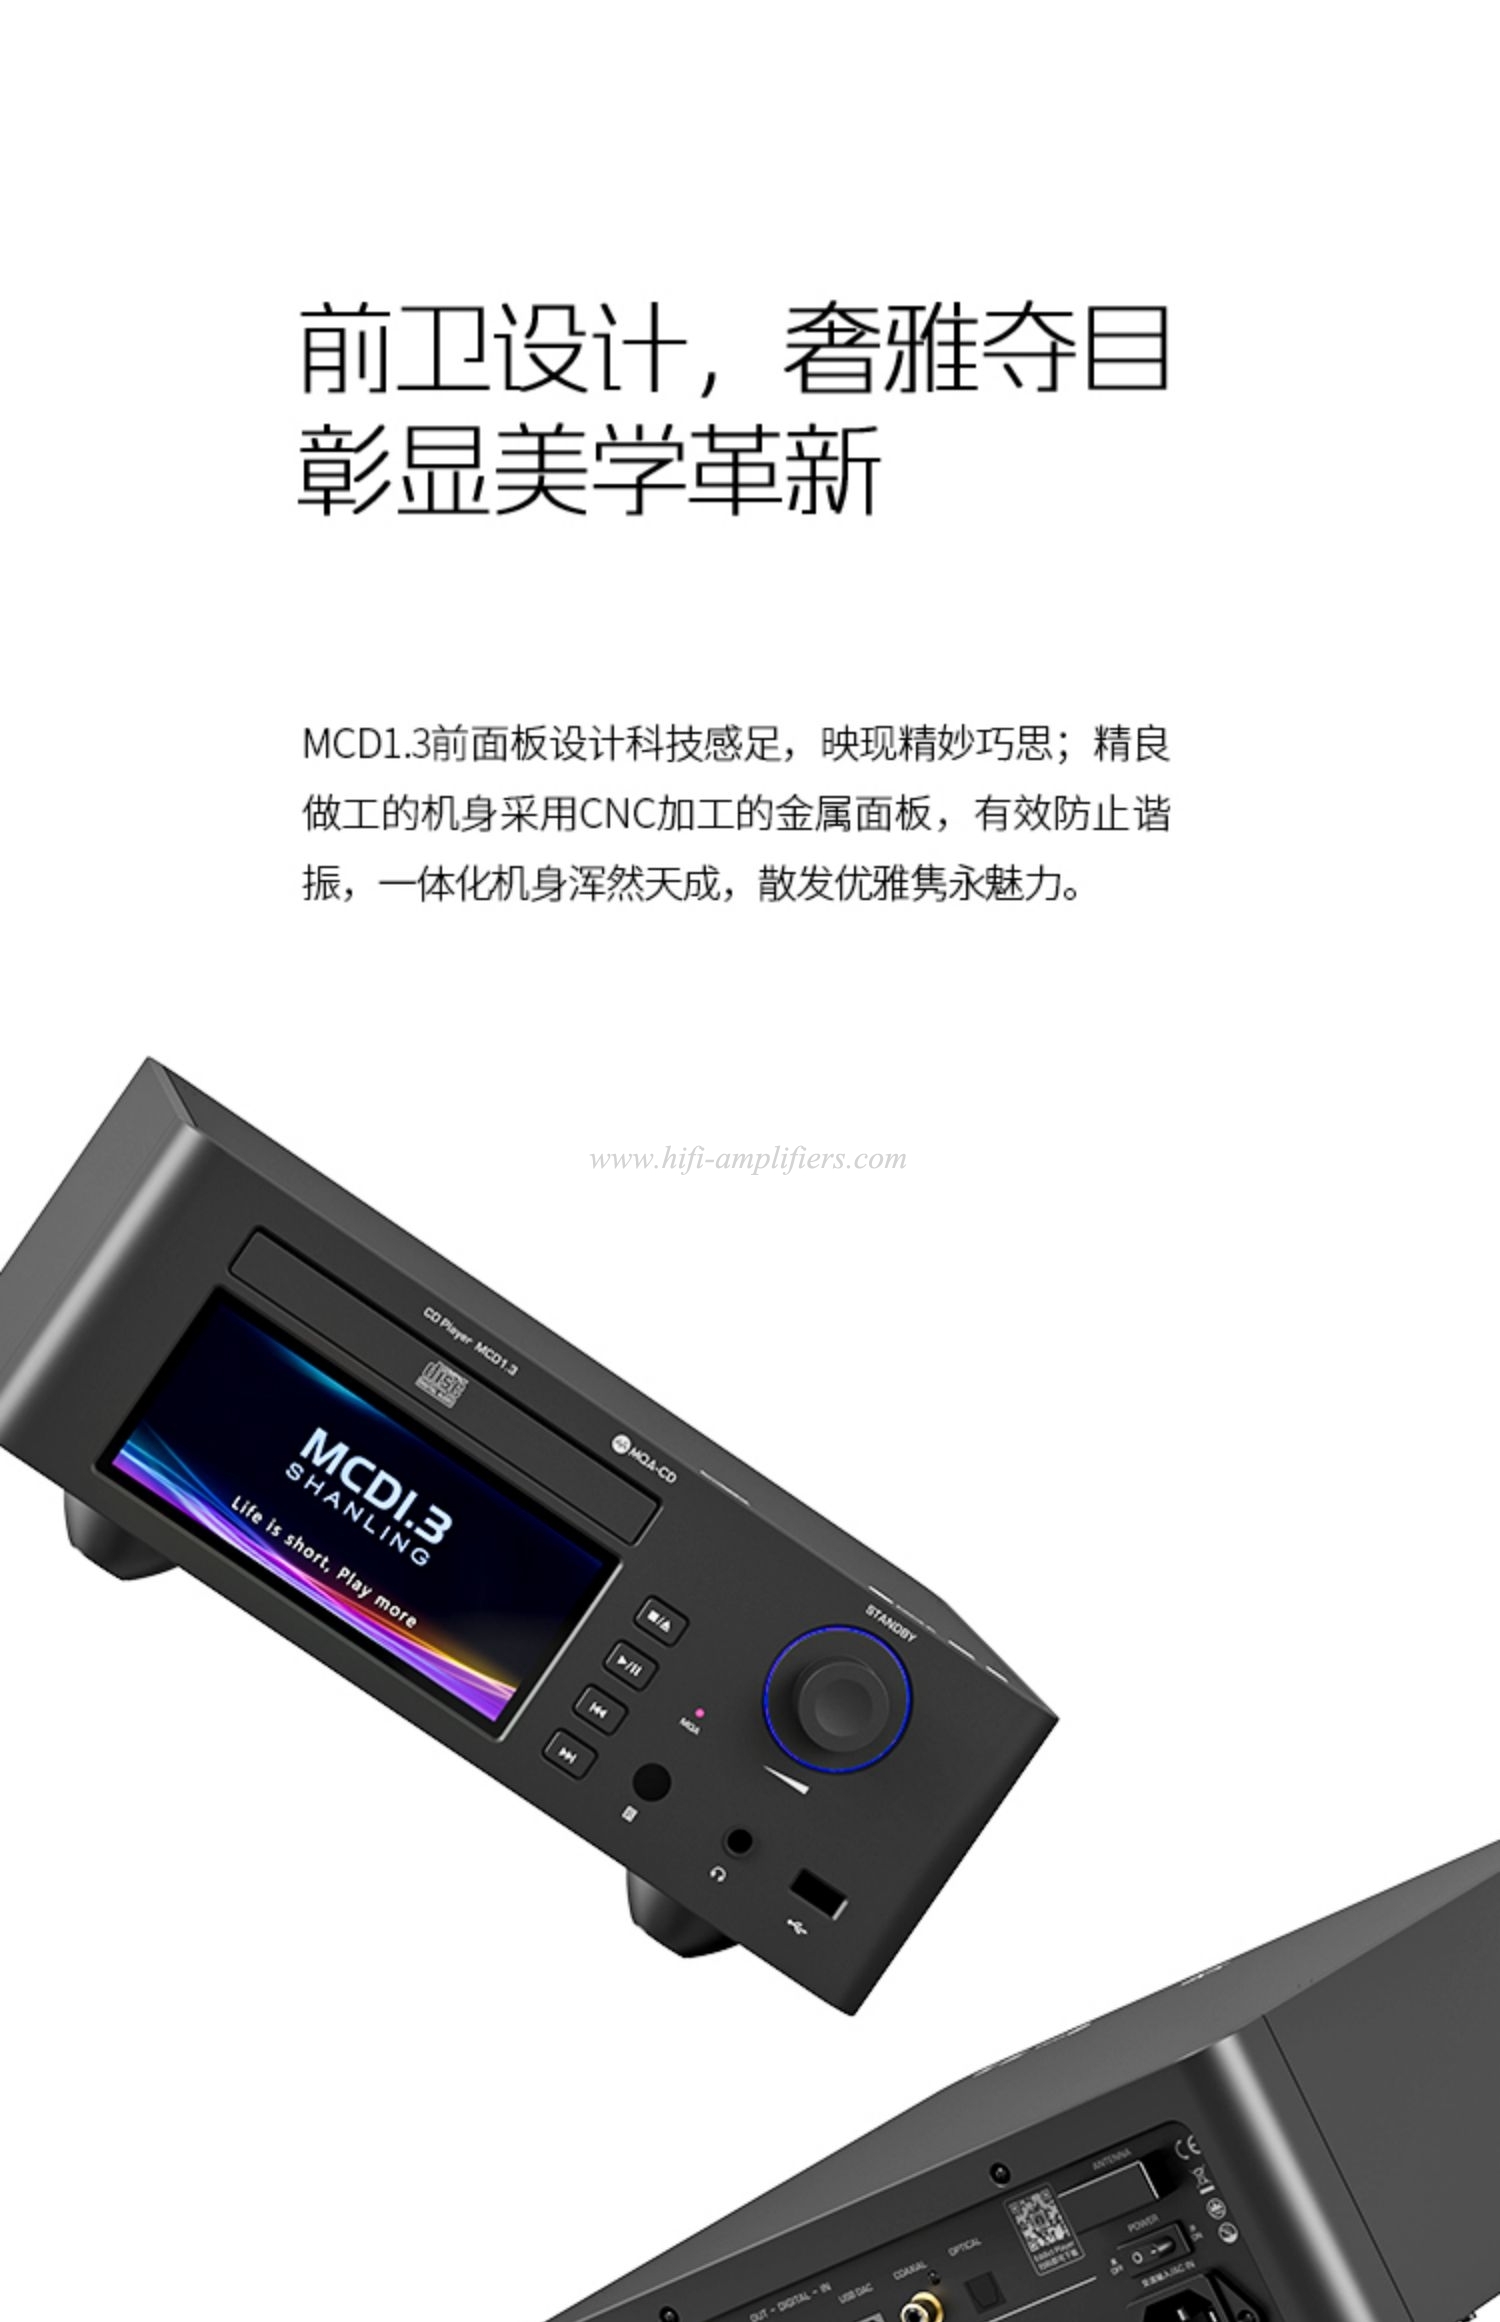 Shanling MCD1.3 Multifunctional CD Player MQA-CD Headphone Amplifier AK4499EX DAC  XMUS UX316 USB Input